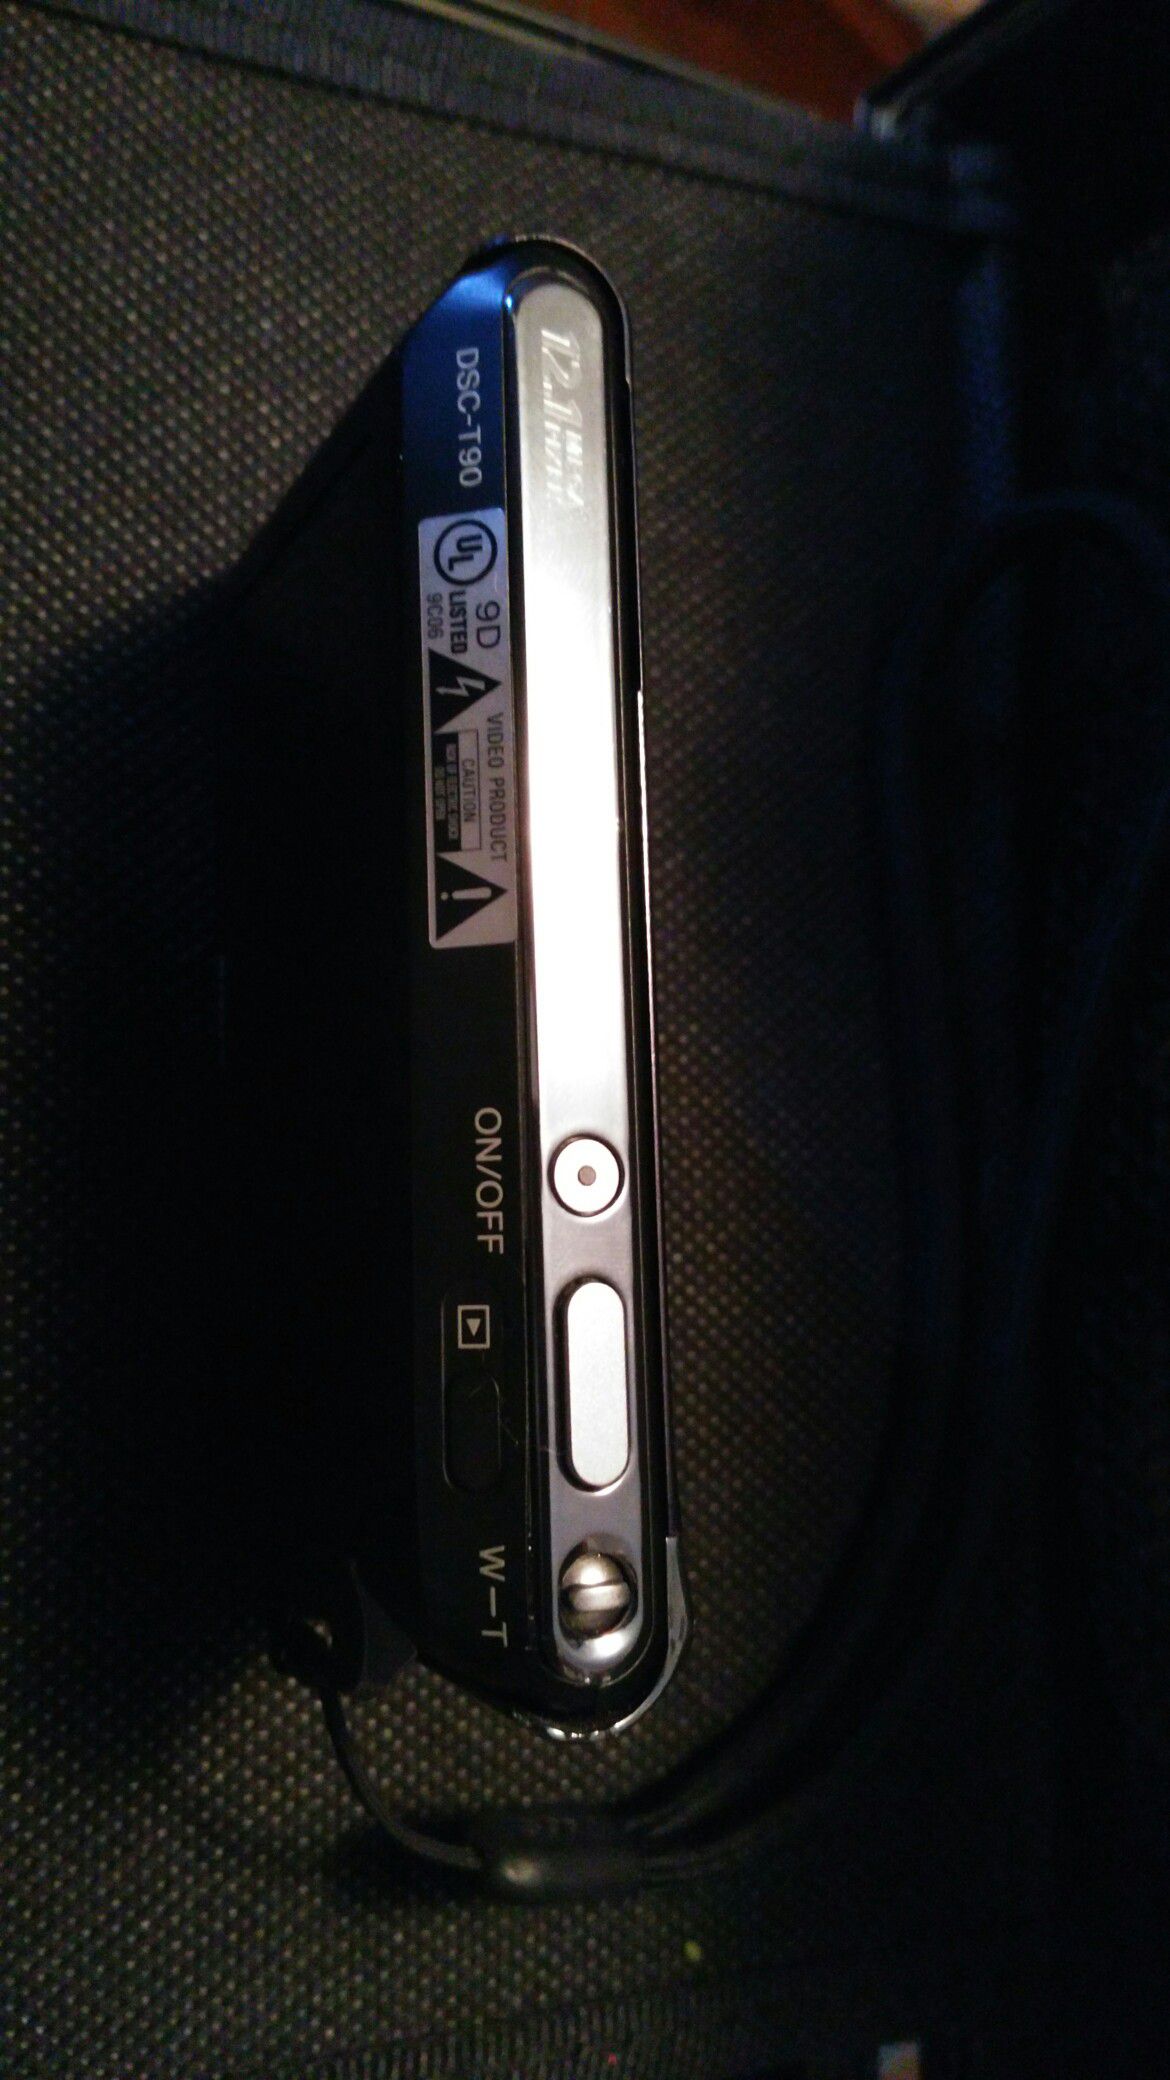 Sony Cyber Shot camera T90